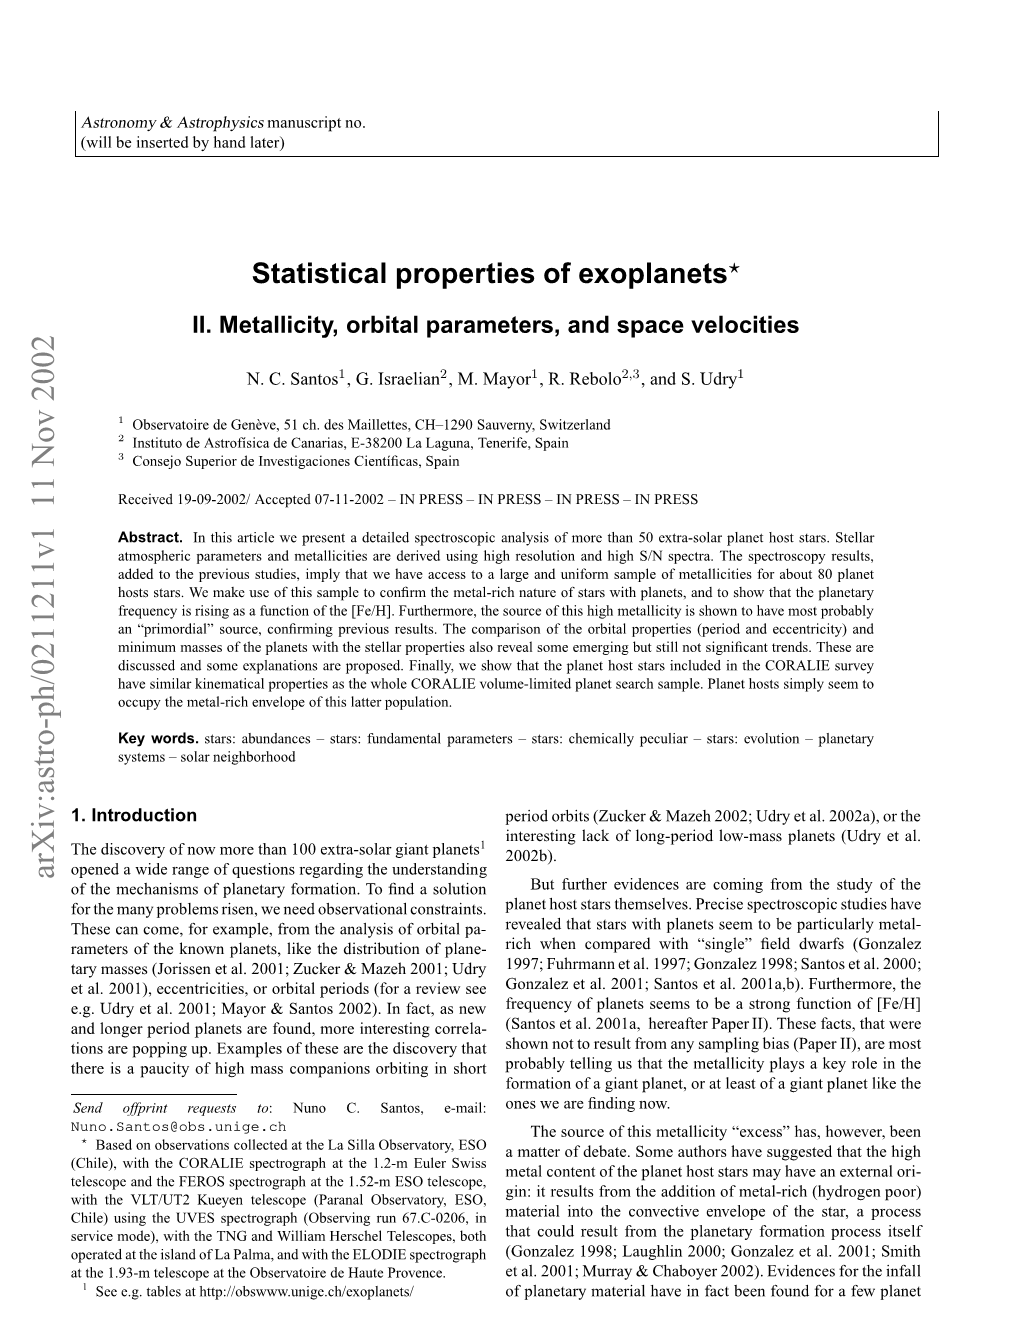 Statistical Properties of Exoplanets II. Metallicity, Orbital Parameters, And